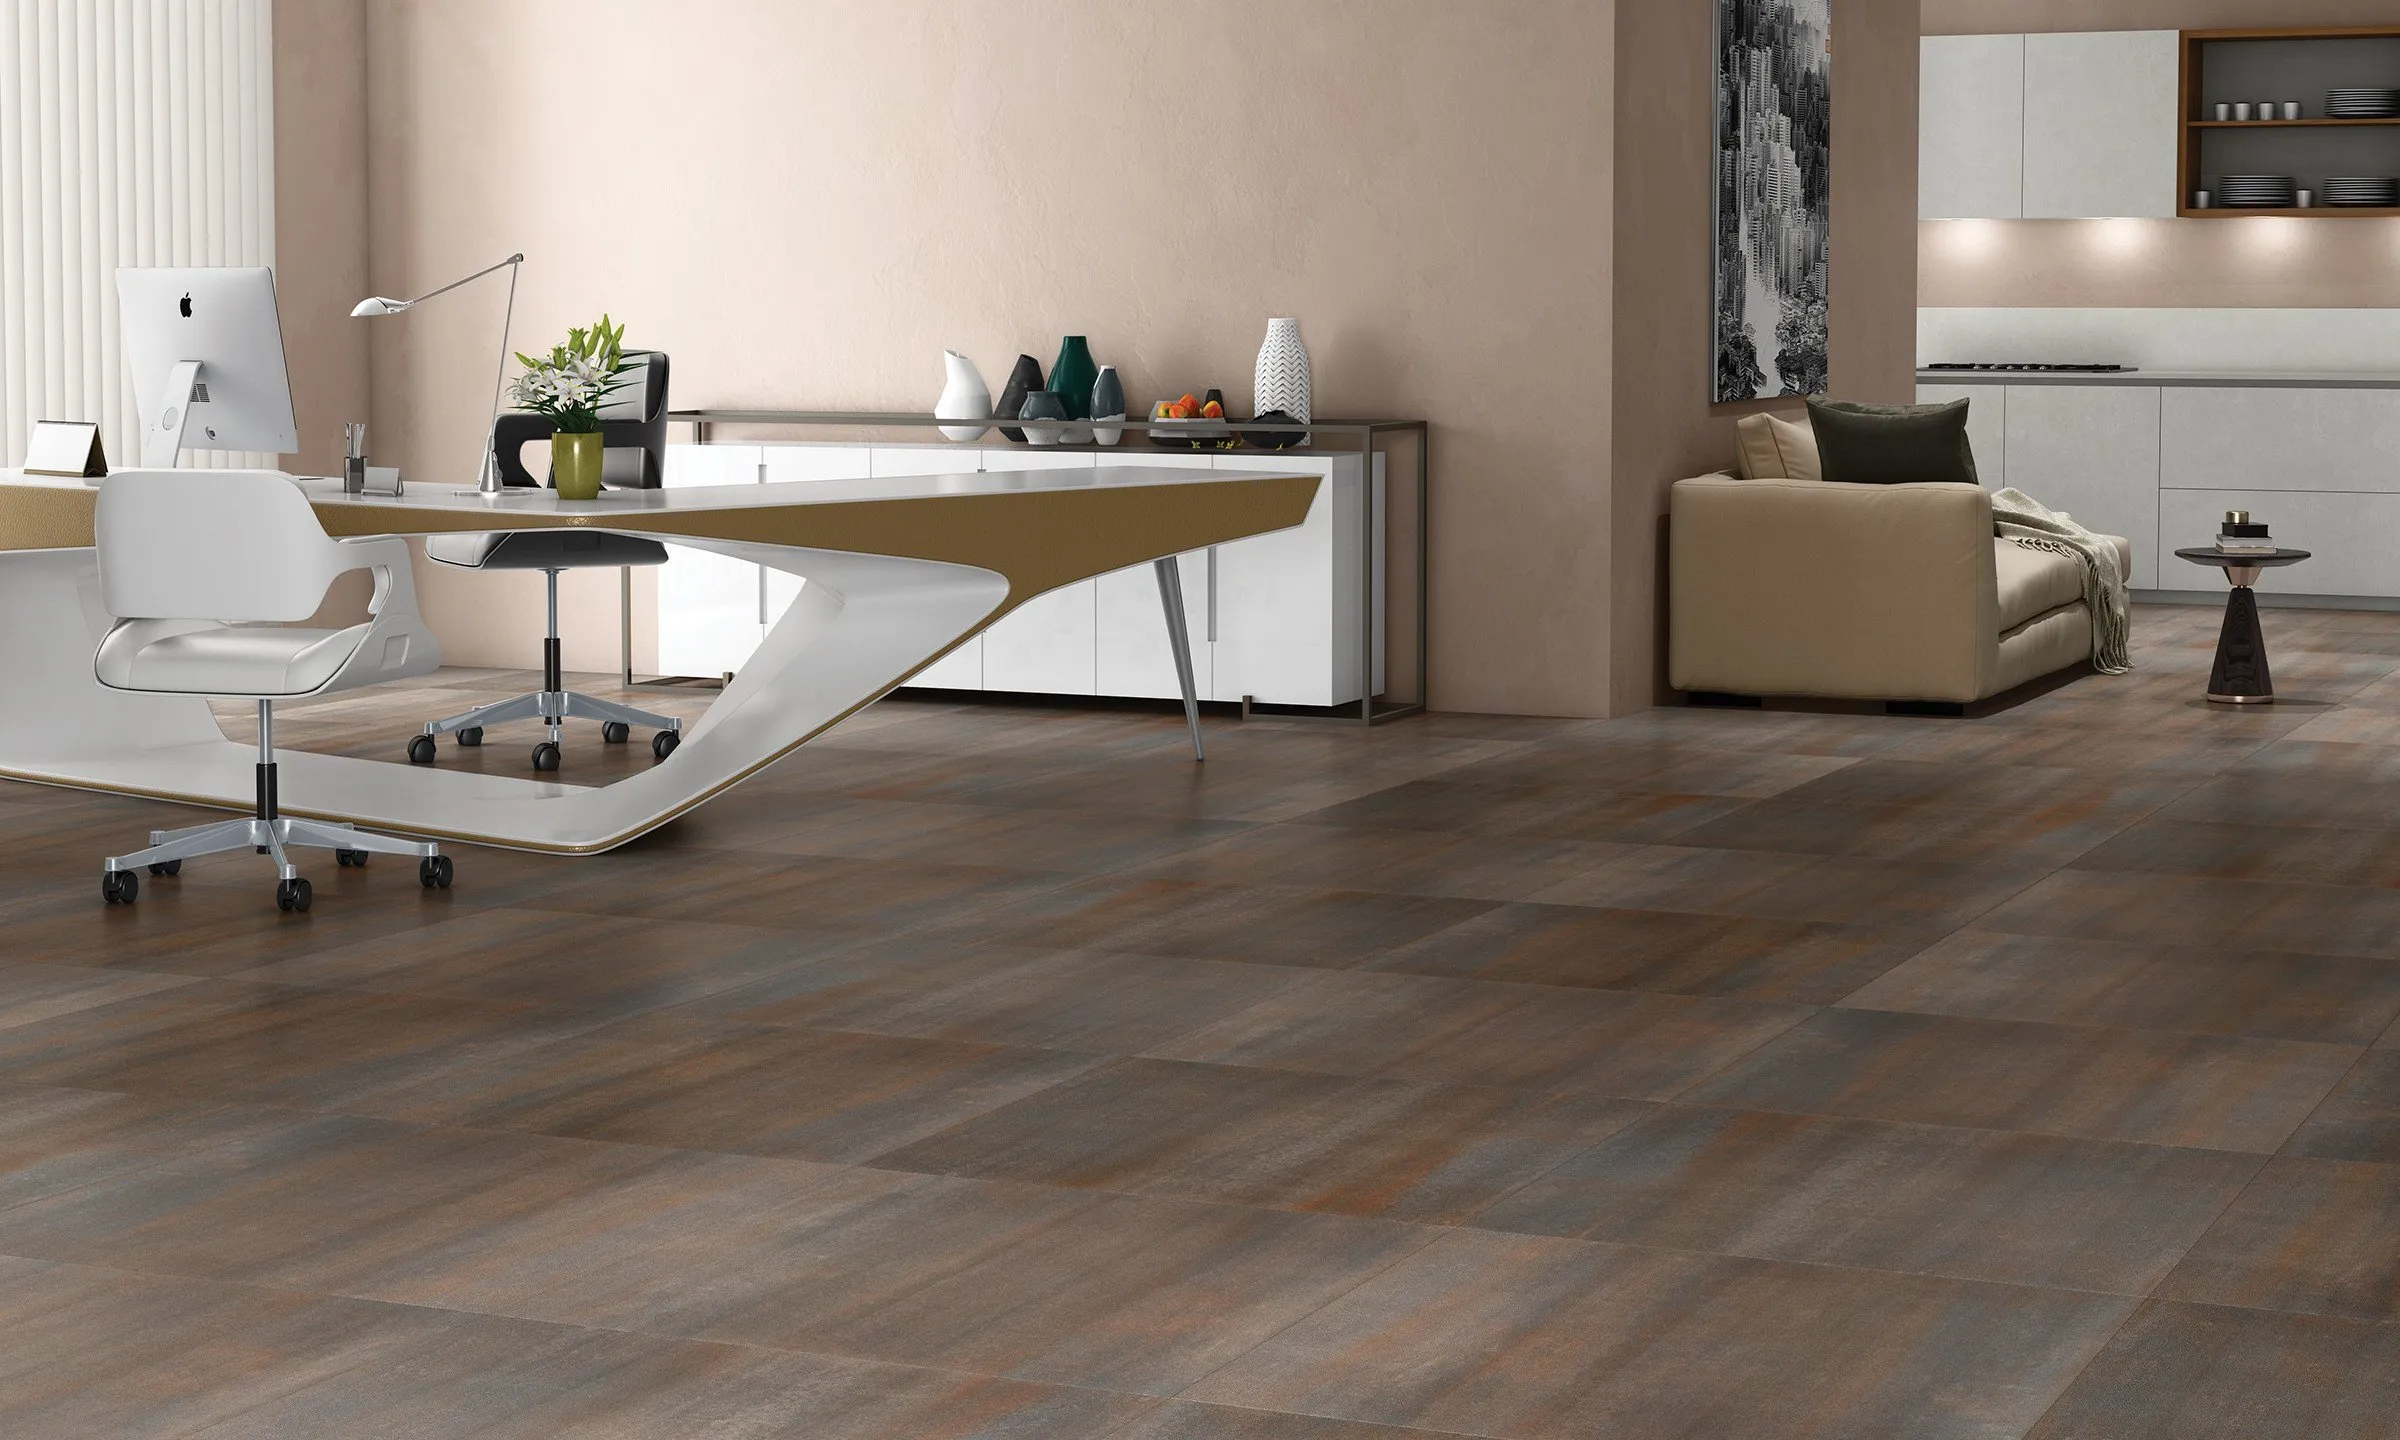 Brown Ceramic floor tile